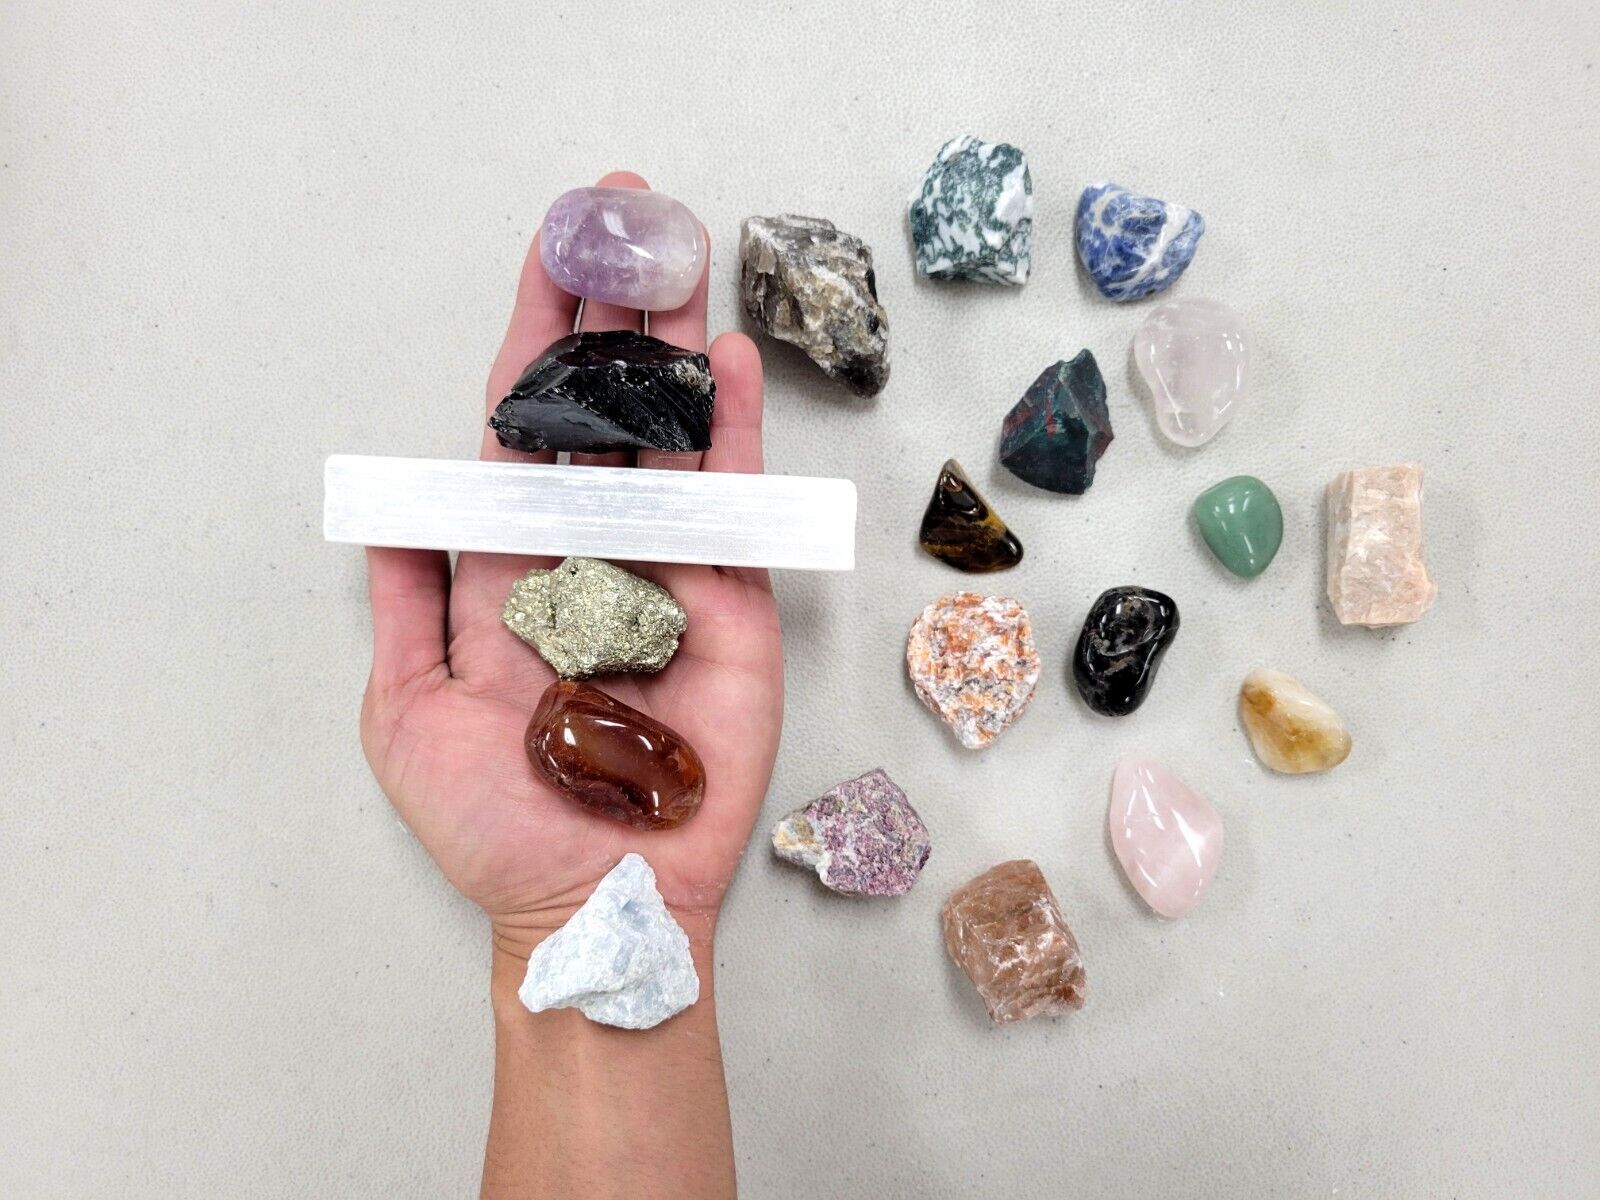 20 PCS Crystal Starter Set, Mixed Healing Crystals Natural Gemstones Collection